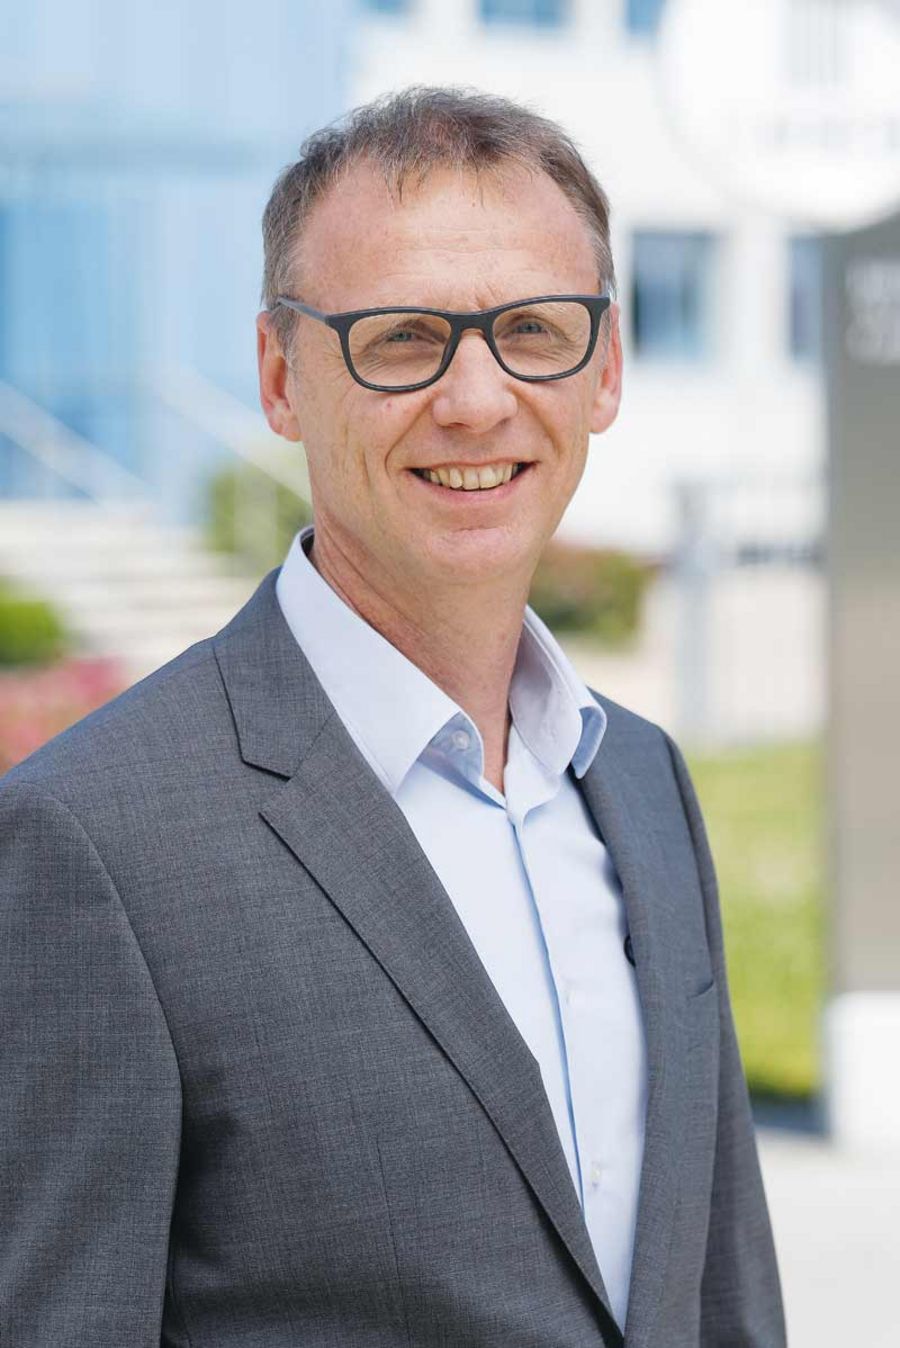 Dr. Jörg Zimmer, Geschäftsführer der Cesra Arzneimittel GmbH & Co. KG